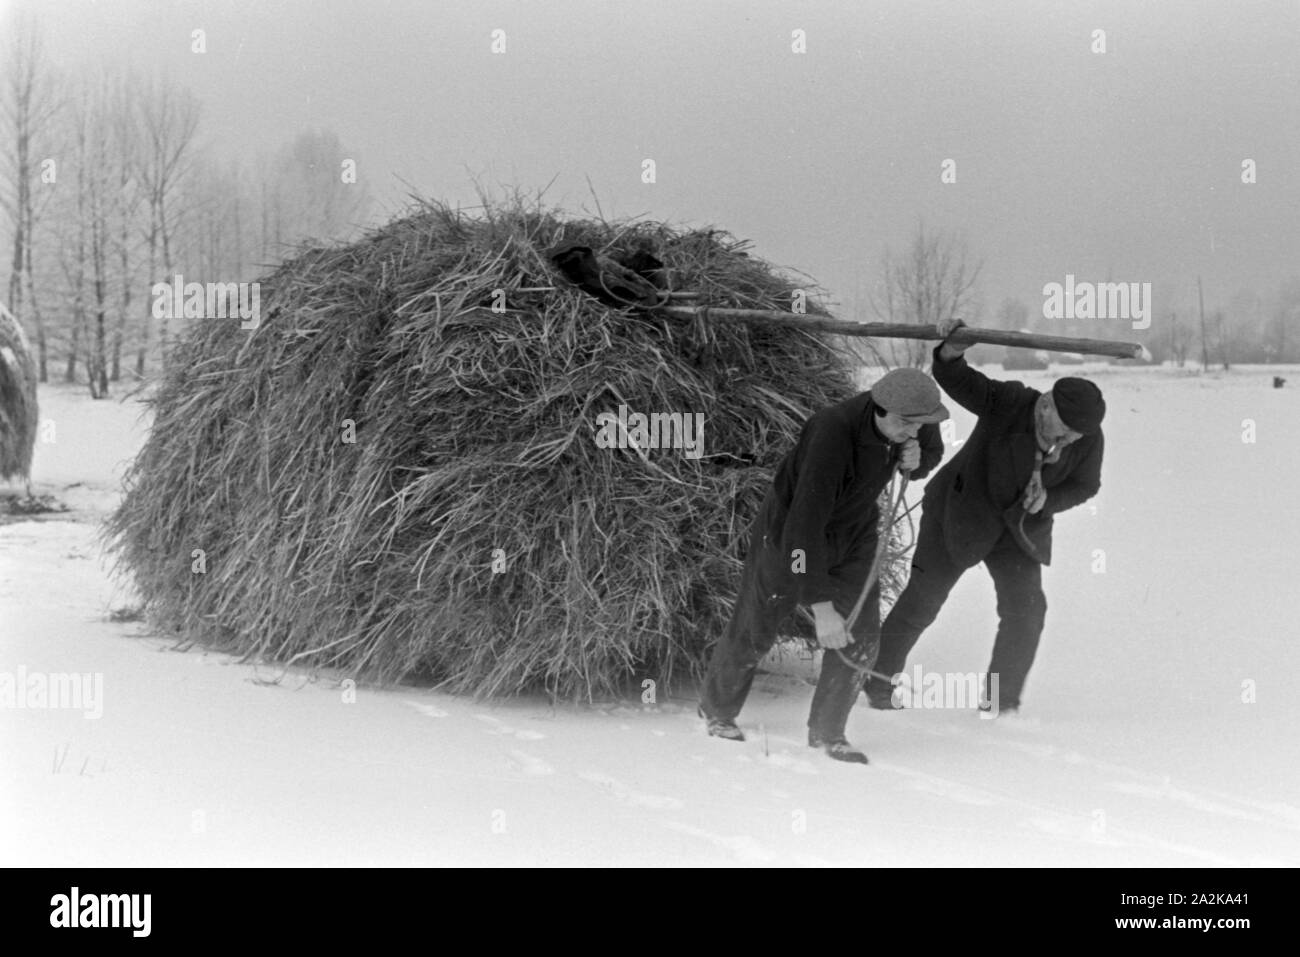 Zwei Männer holen Feuerholz aus dem Spreewald, Deutschland 1930er Jahre. Two man pulling firewood from a Spreewald forest, Germany 1930s. Stock Photo